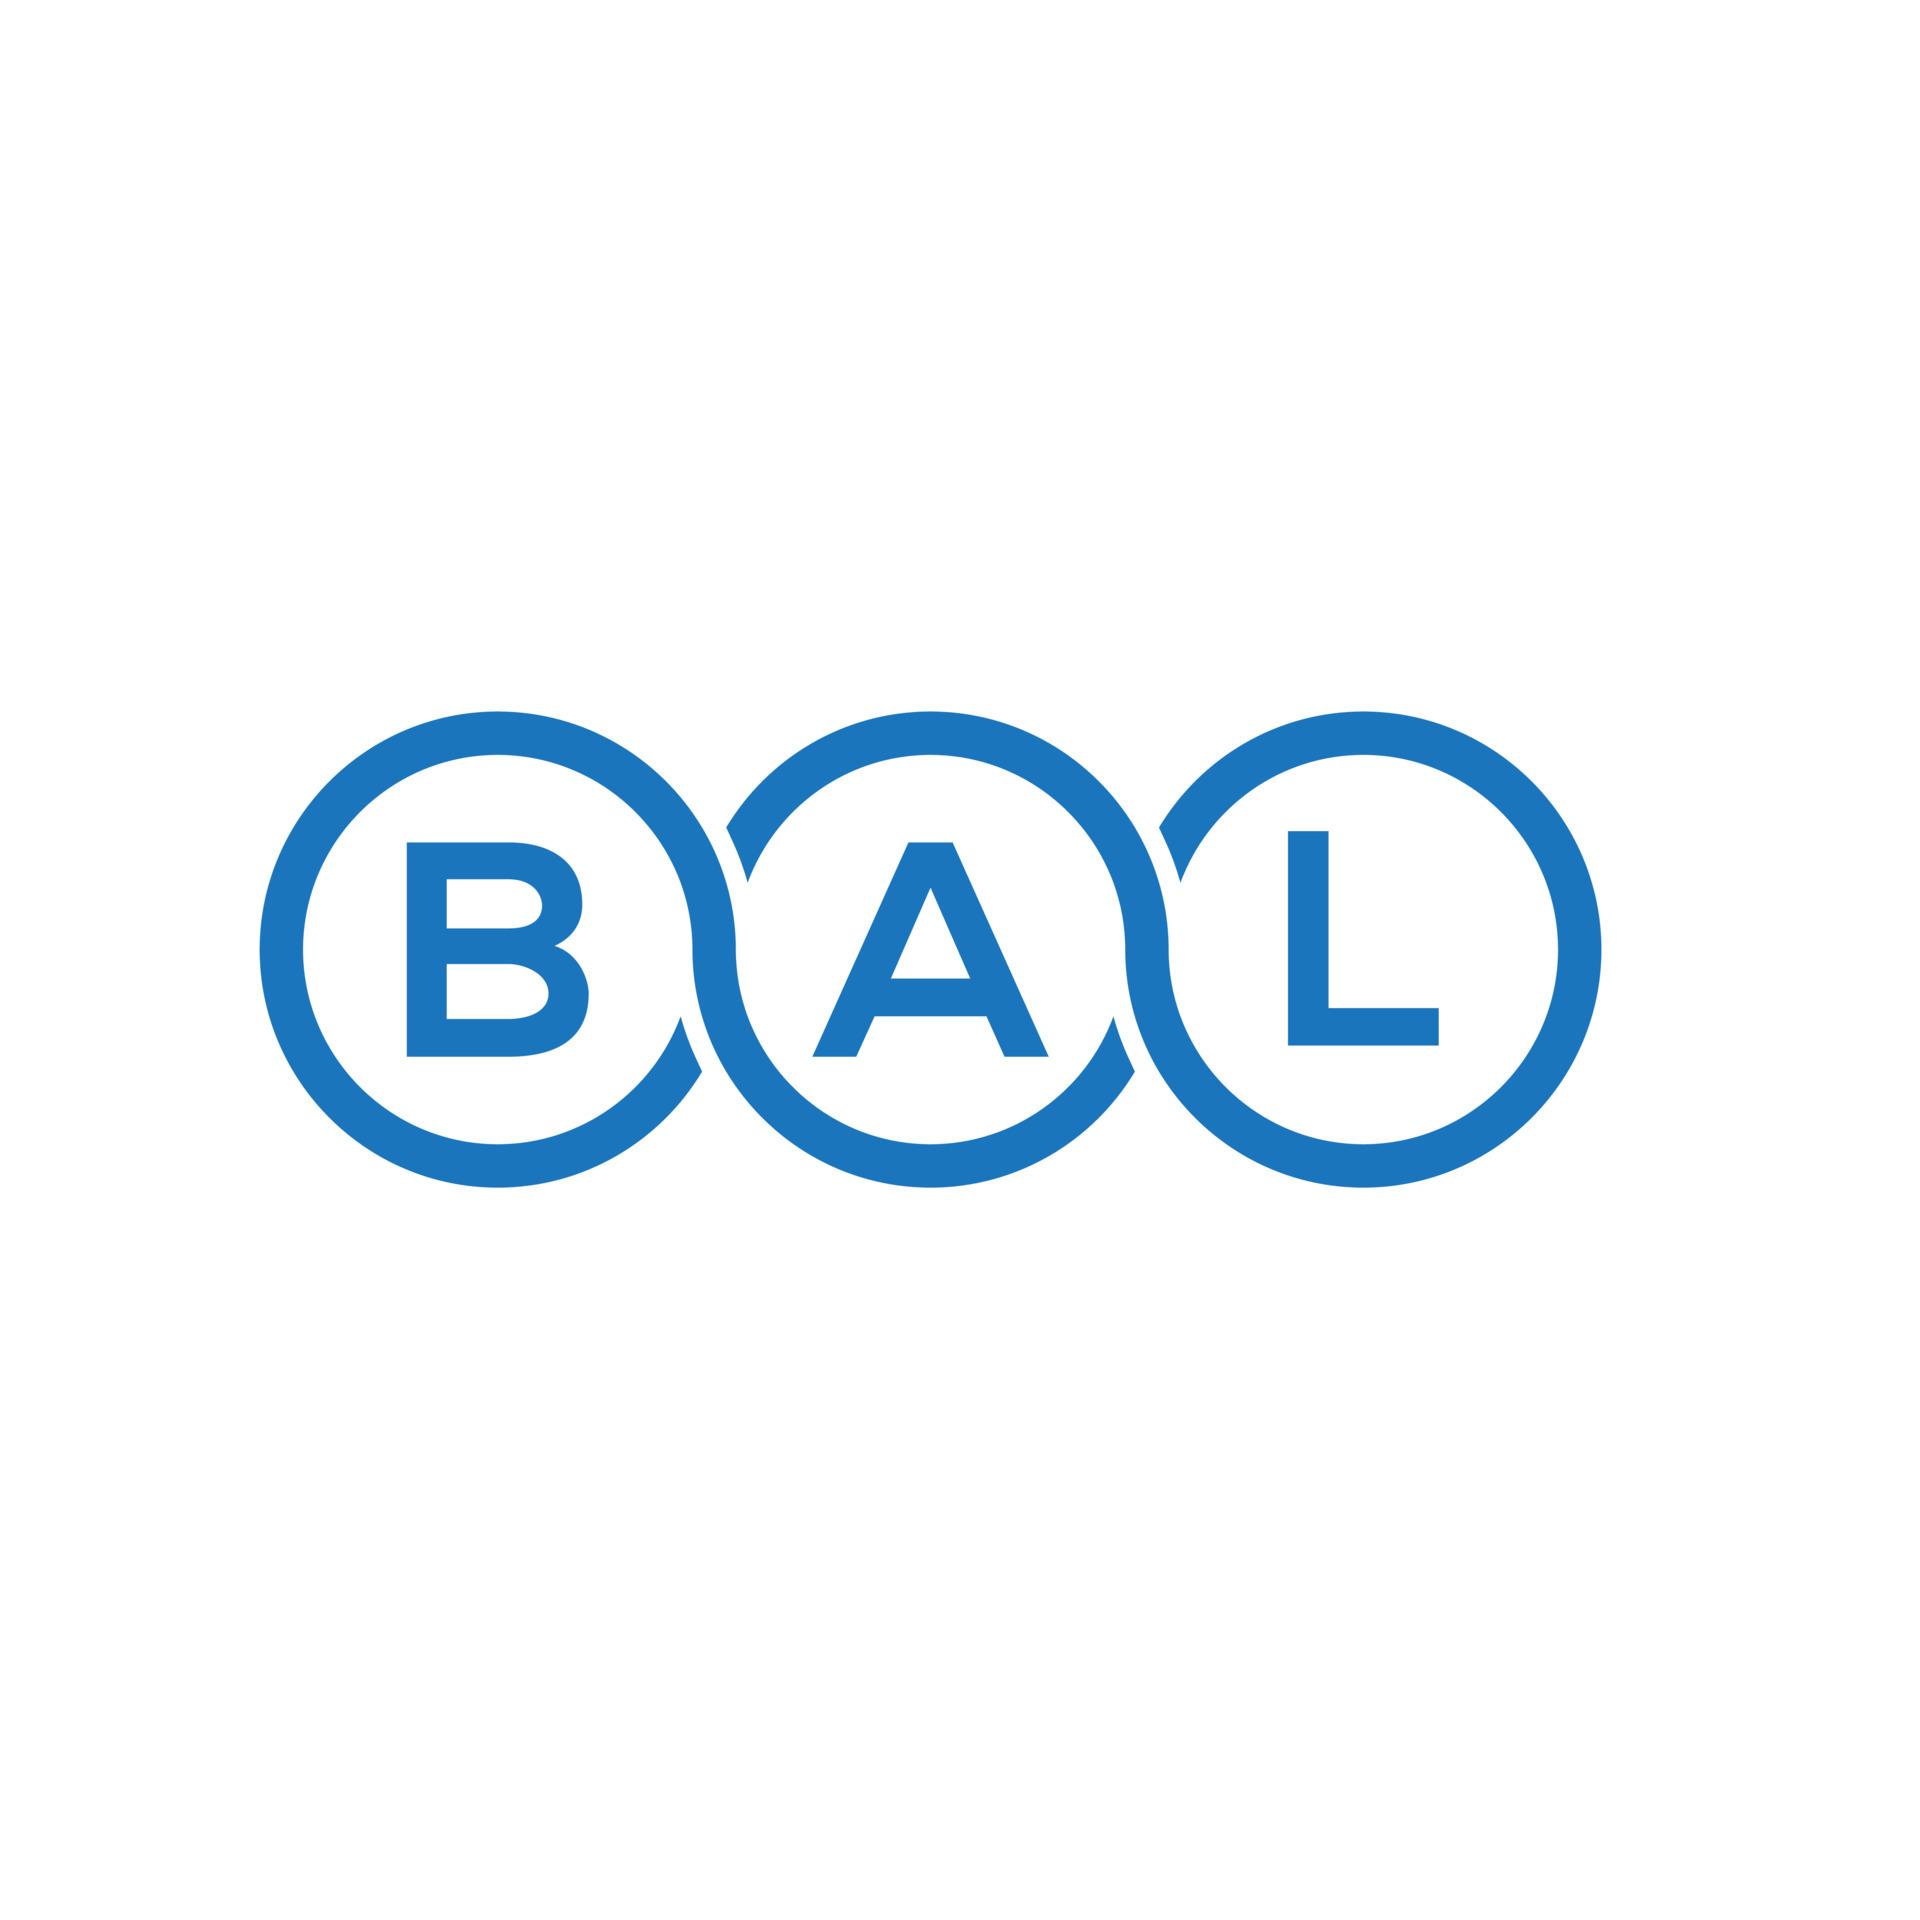 bal-letter-logo-design-on-white-background-bal-creative-initials-letter-logo-concept-bal-letter-design-vector